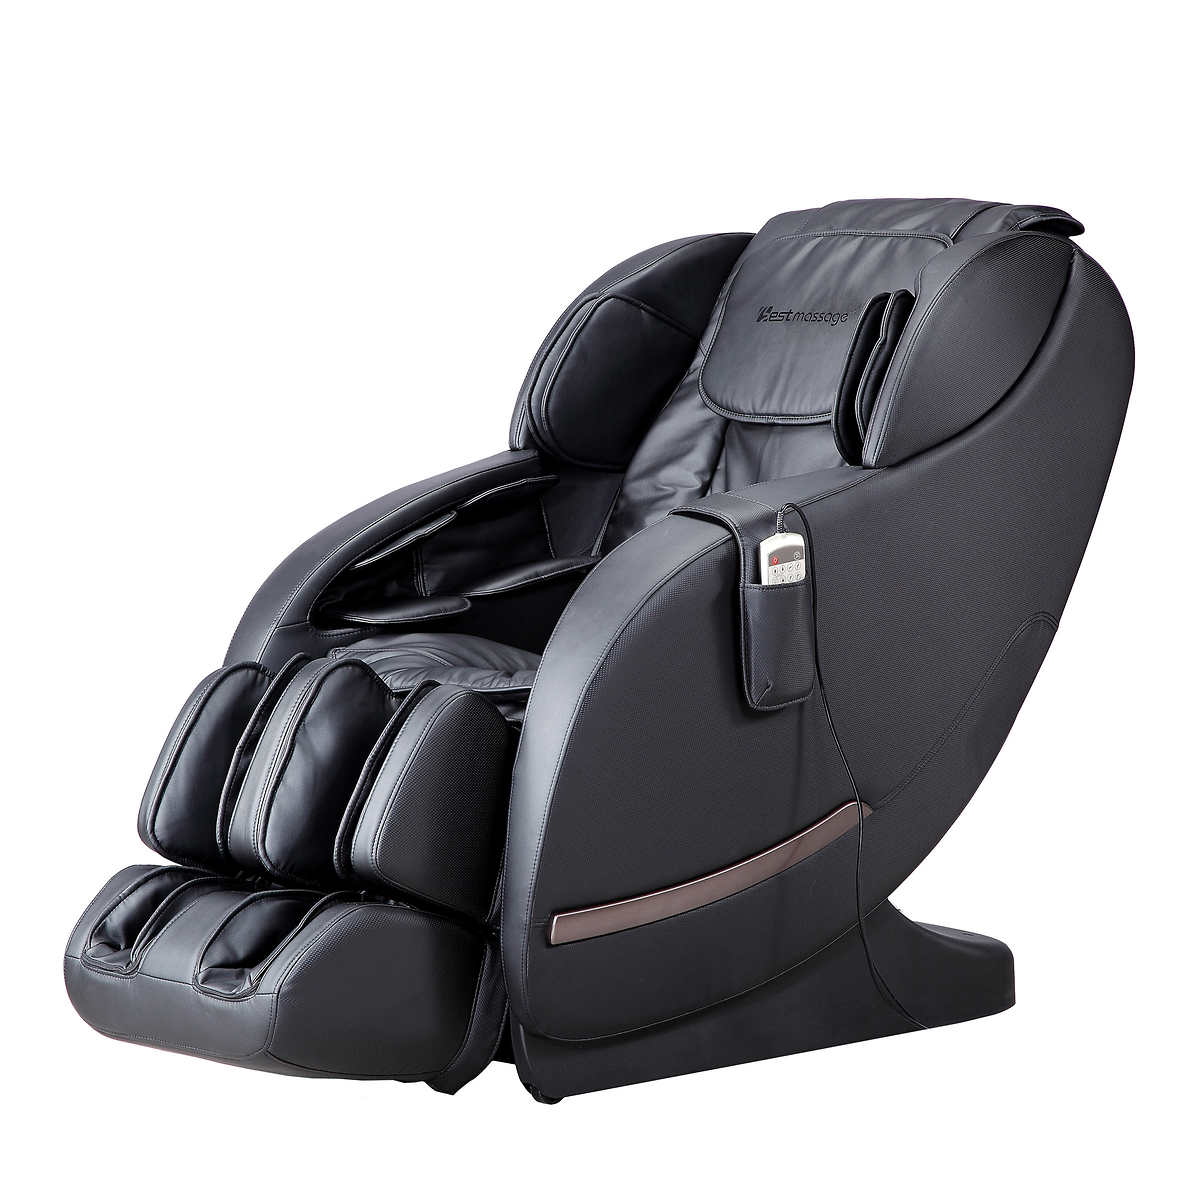 Luxury Massage Chair Zero Gravity : Luxury Massage Chair Zero Gravity